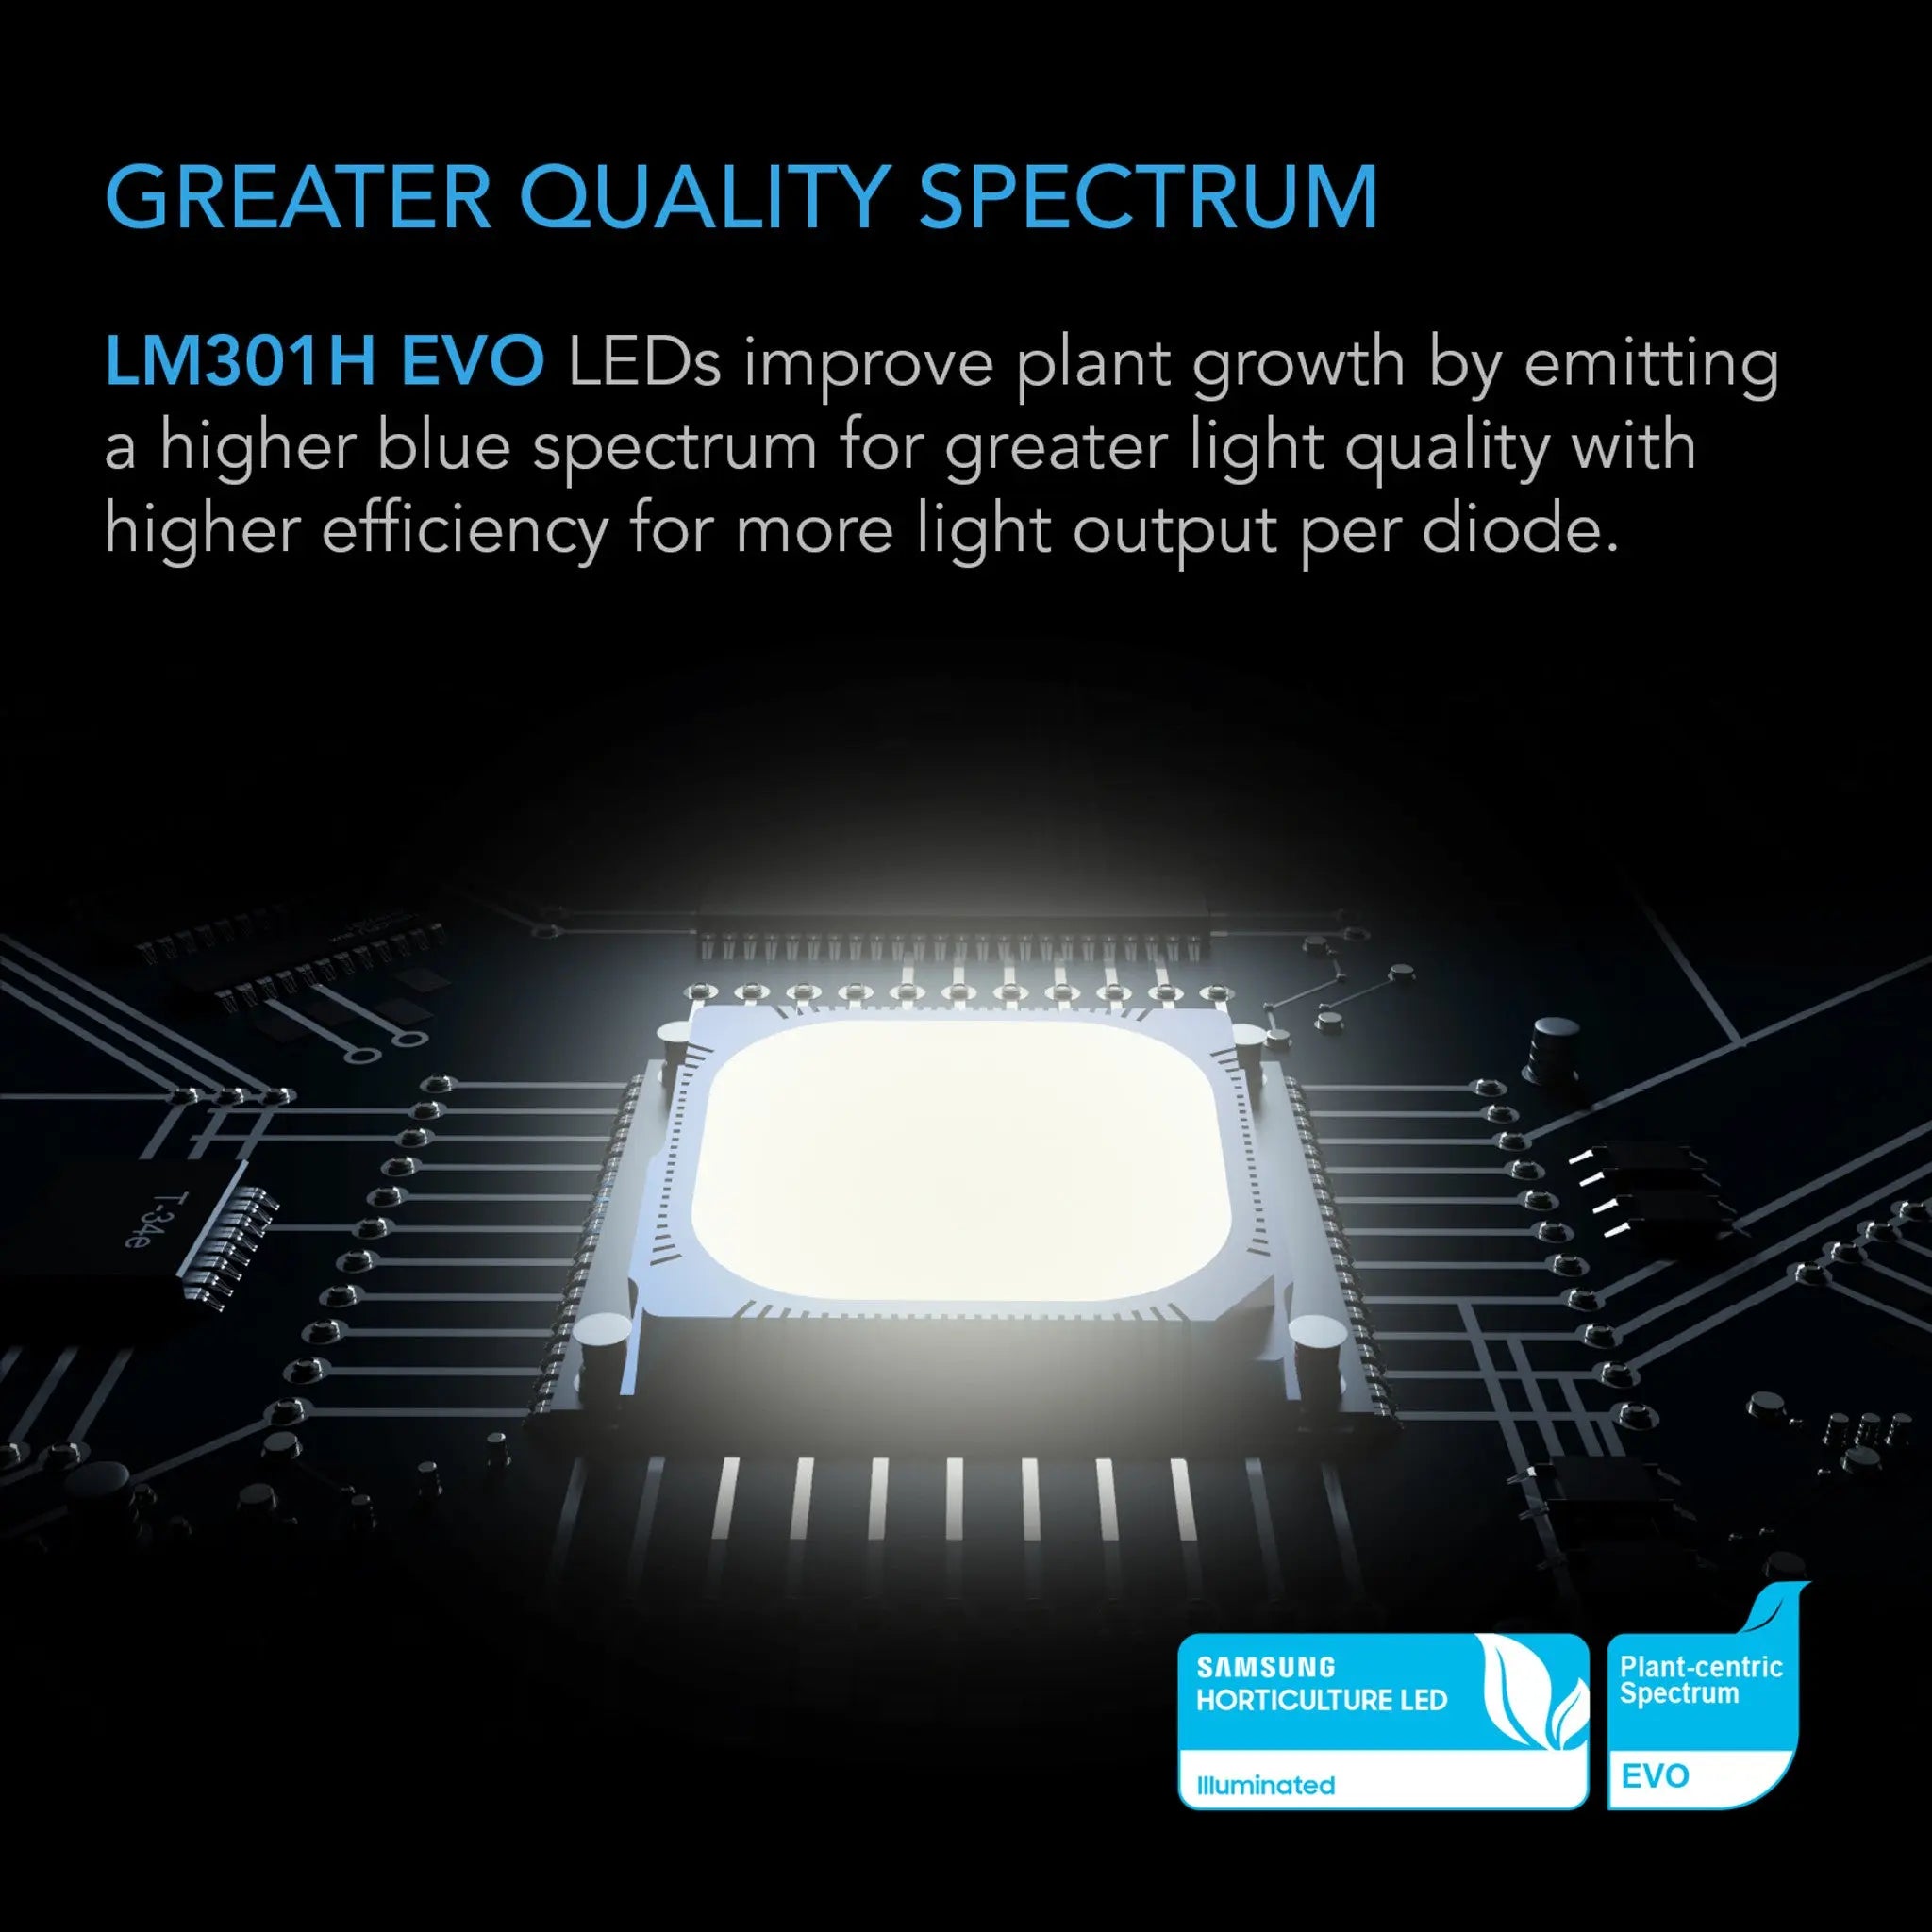 AC Infinity IONFRAME EVO8, Samsung LM301H EVO Commercial LED Grow Light 5x5, 730W